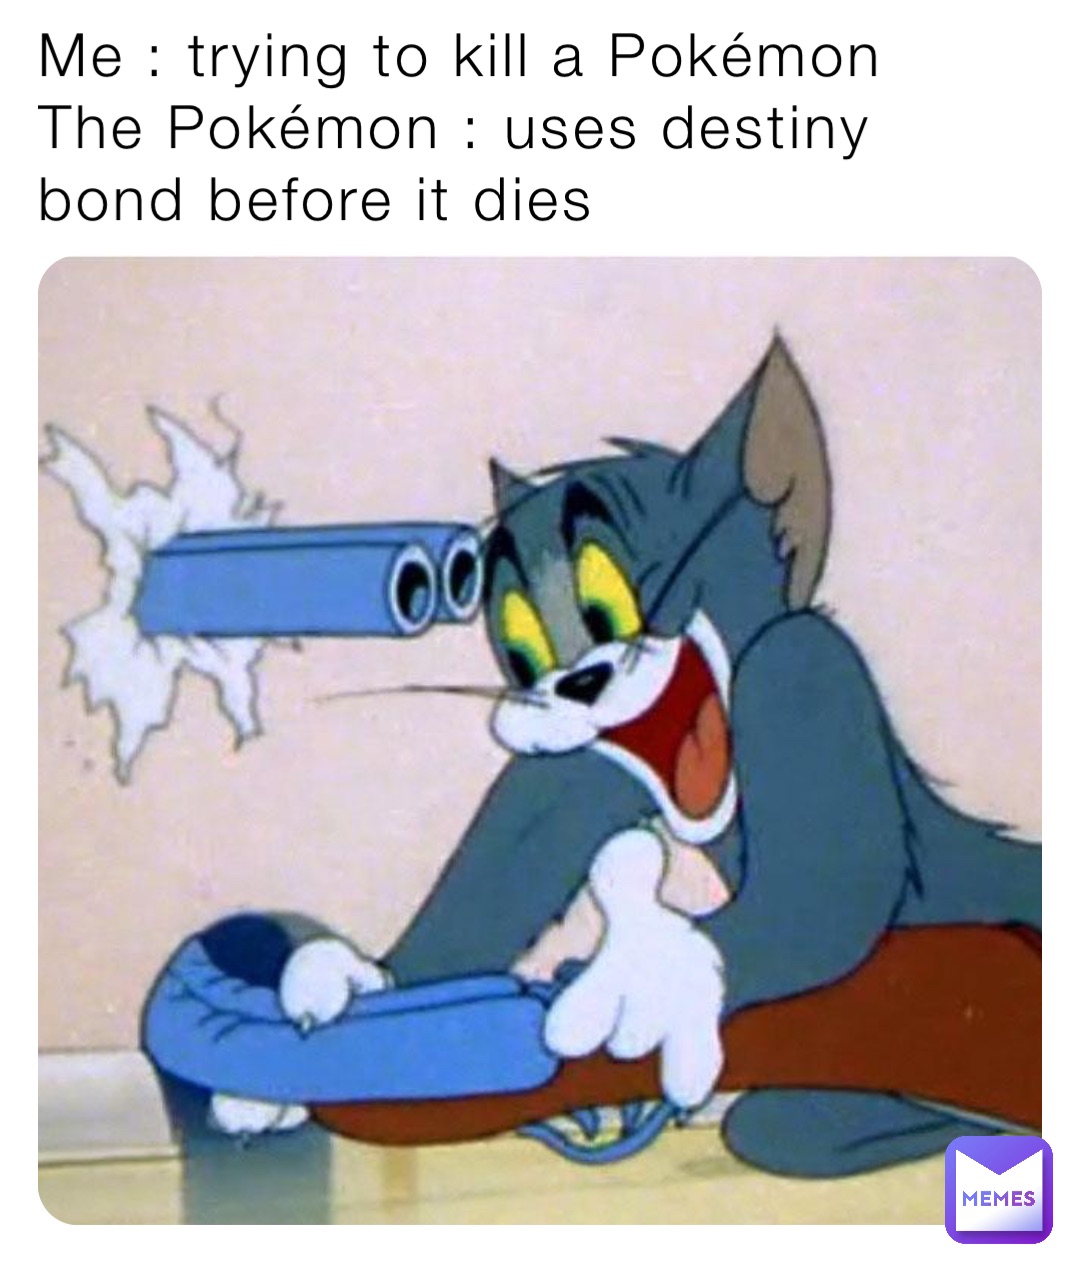 Me : trying to kill a Pokémon 
The Pokémon : uses destiny bond before it dies